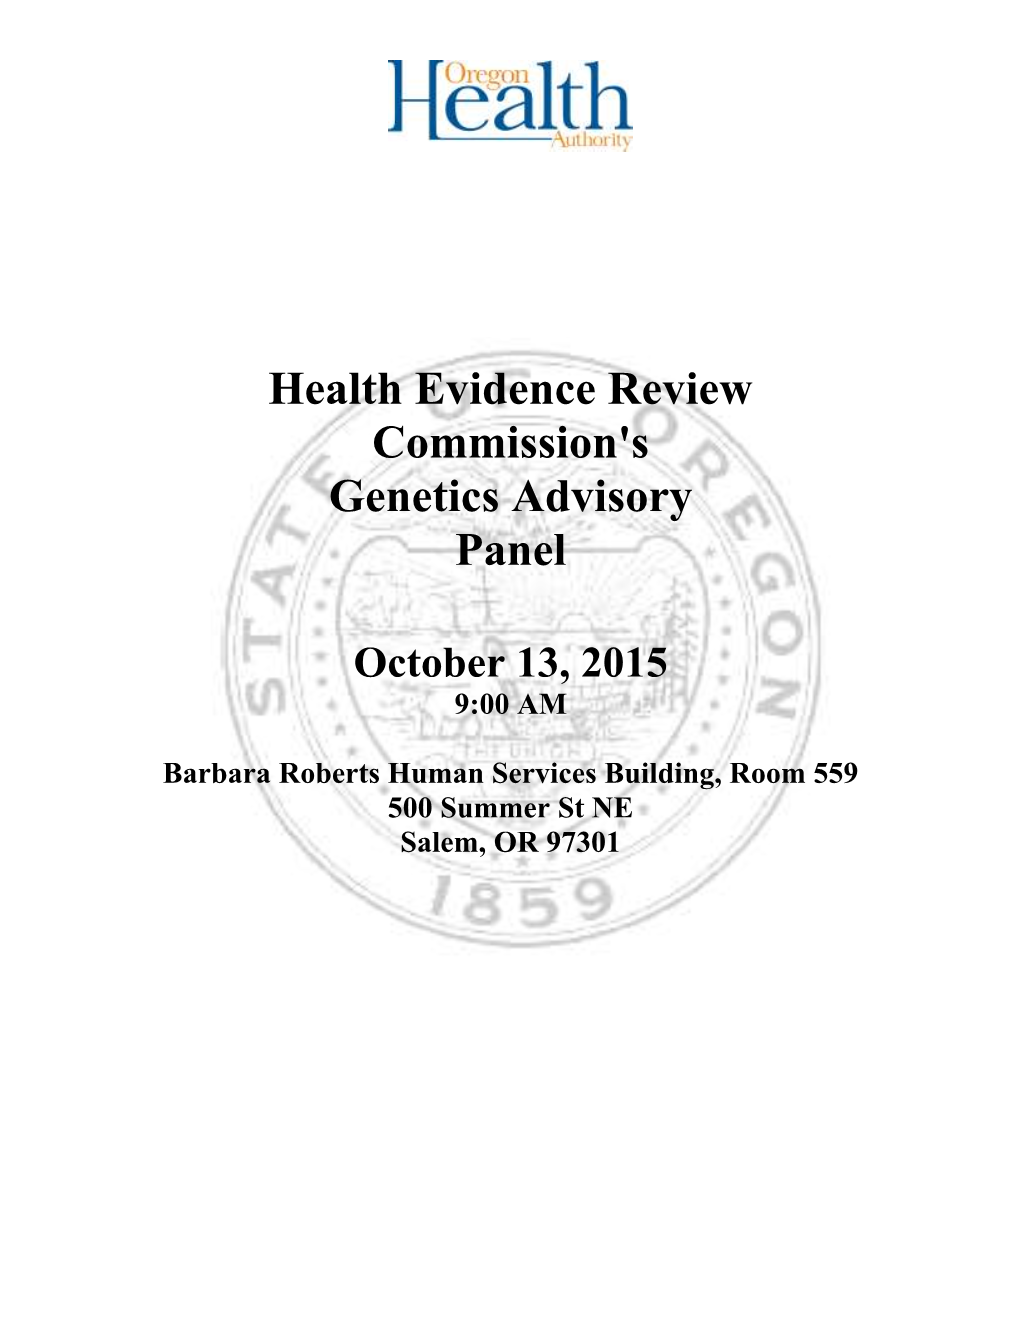 Health Evidence Review Commission's Genetics Advisory Panel